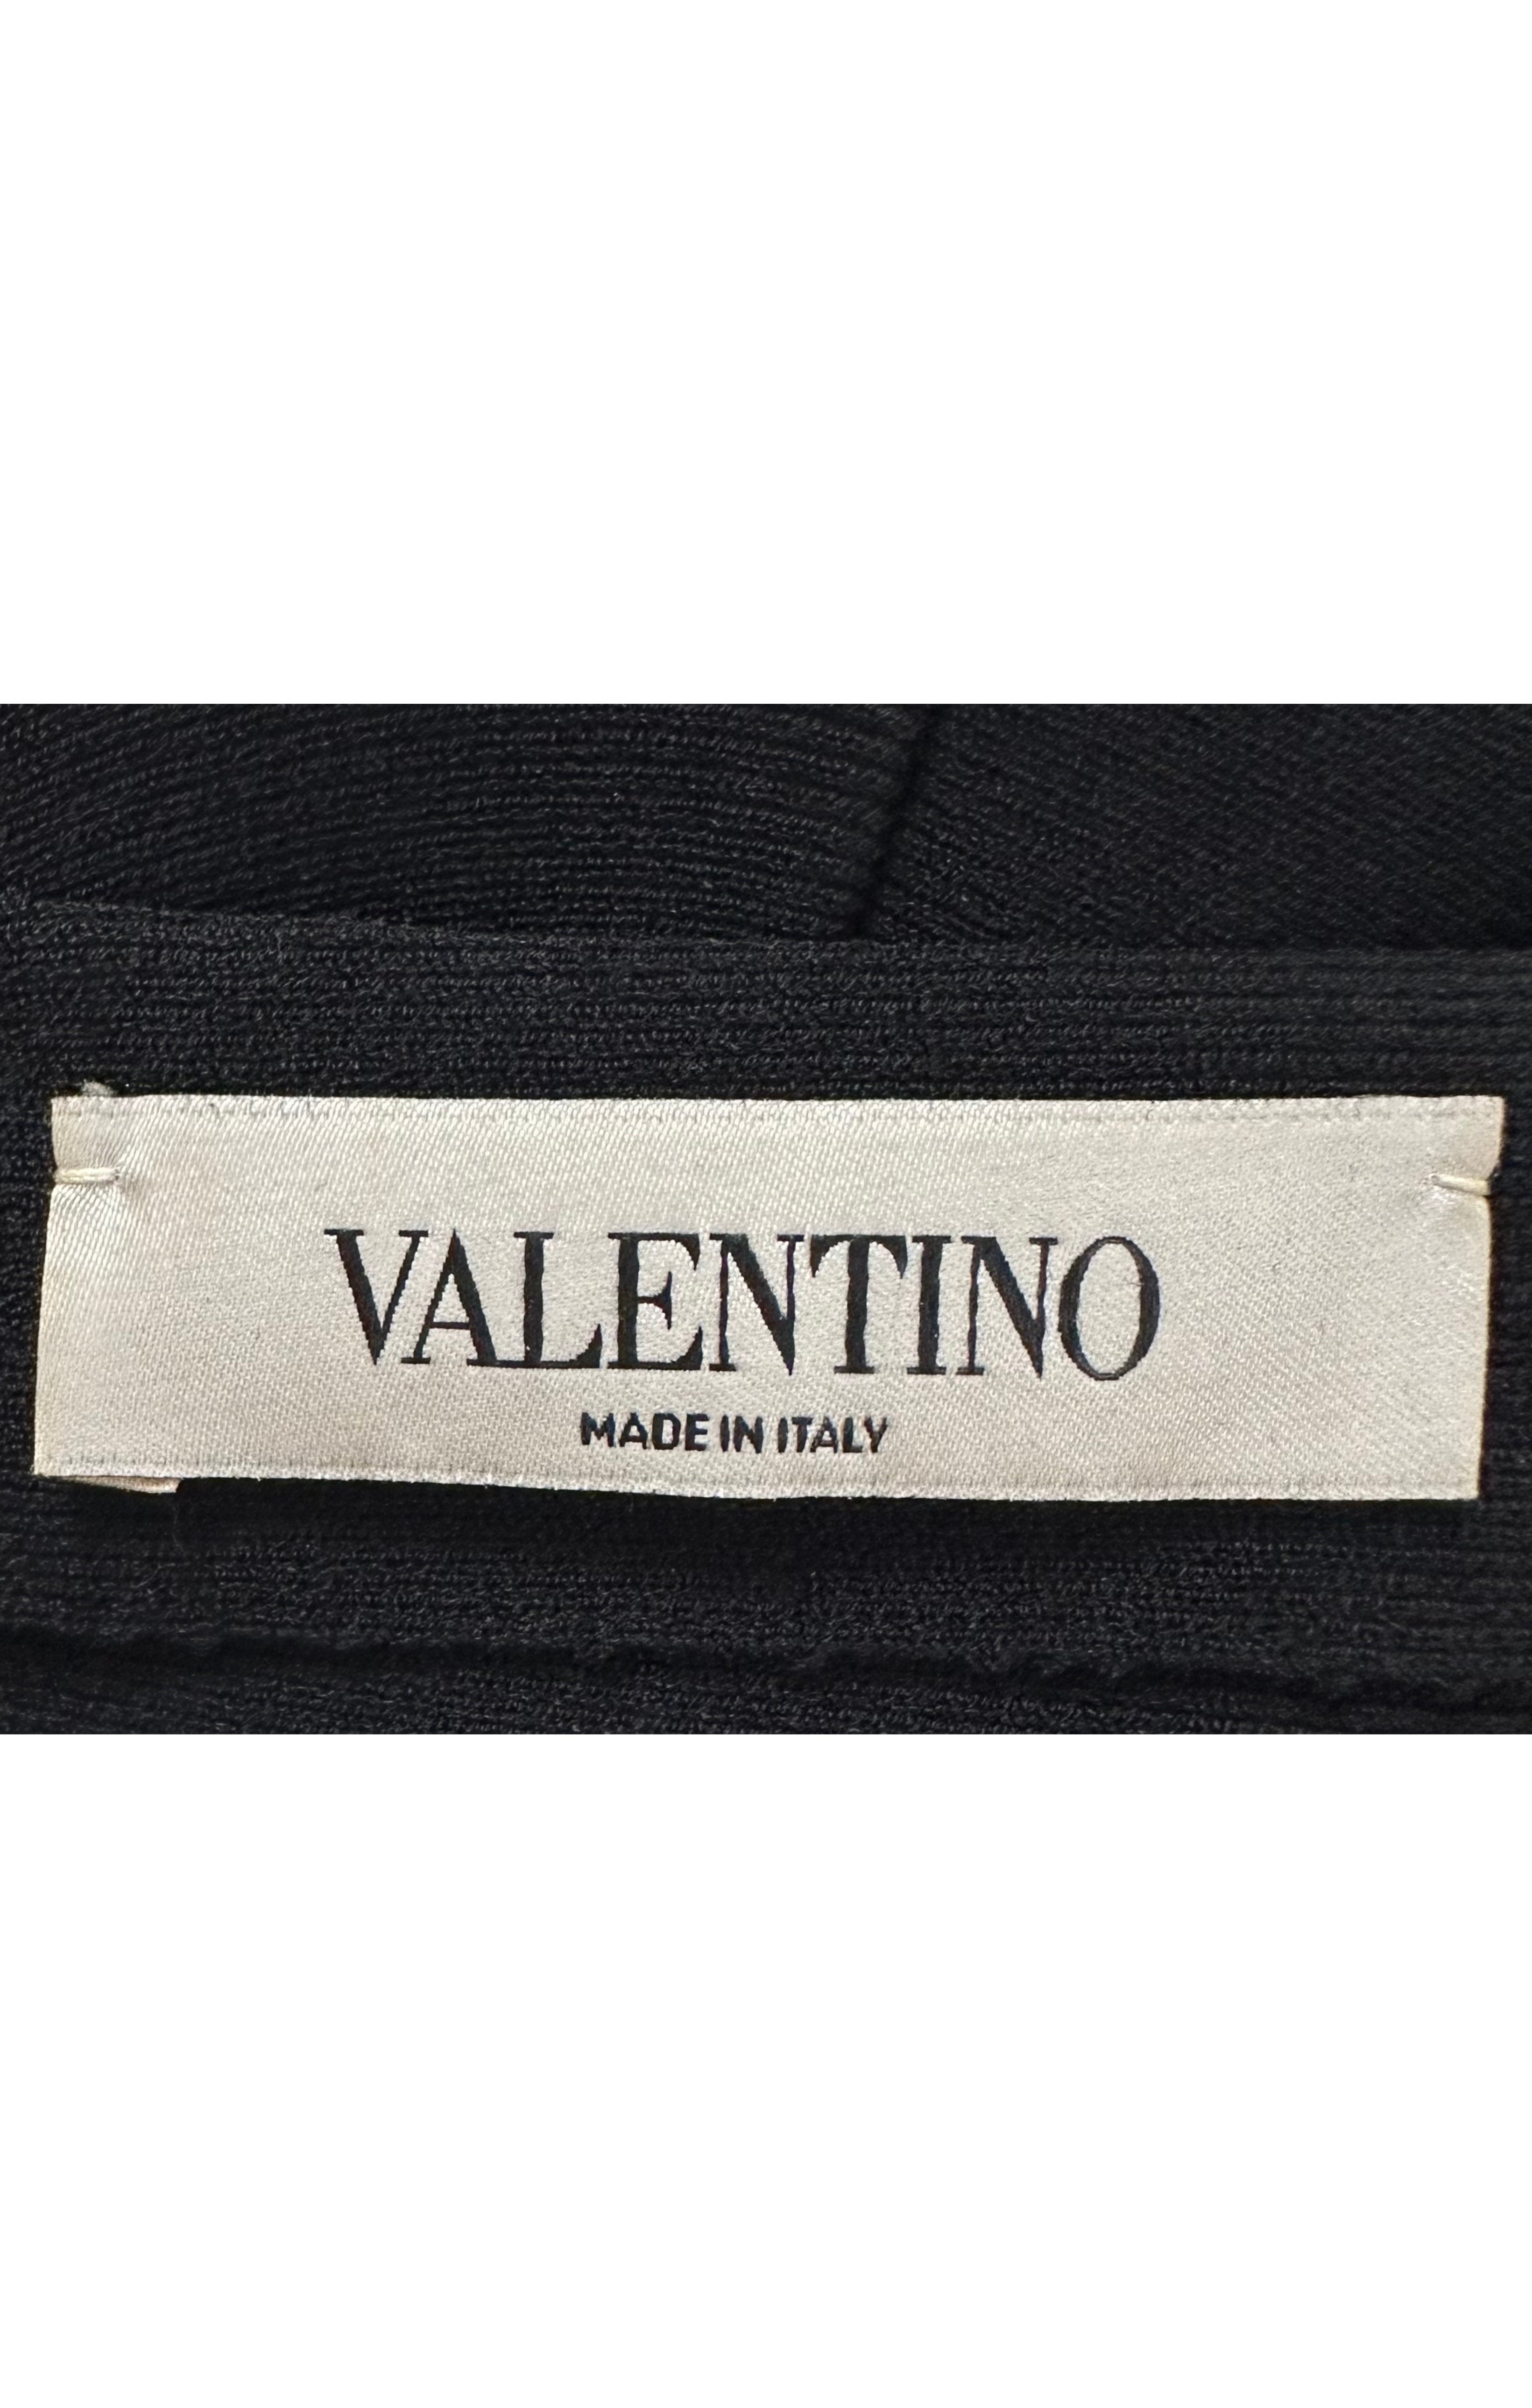 VALENTINO (RARE) Dress Size: M